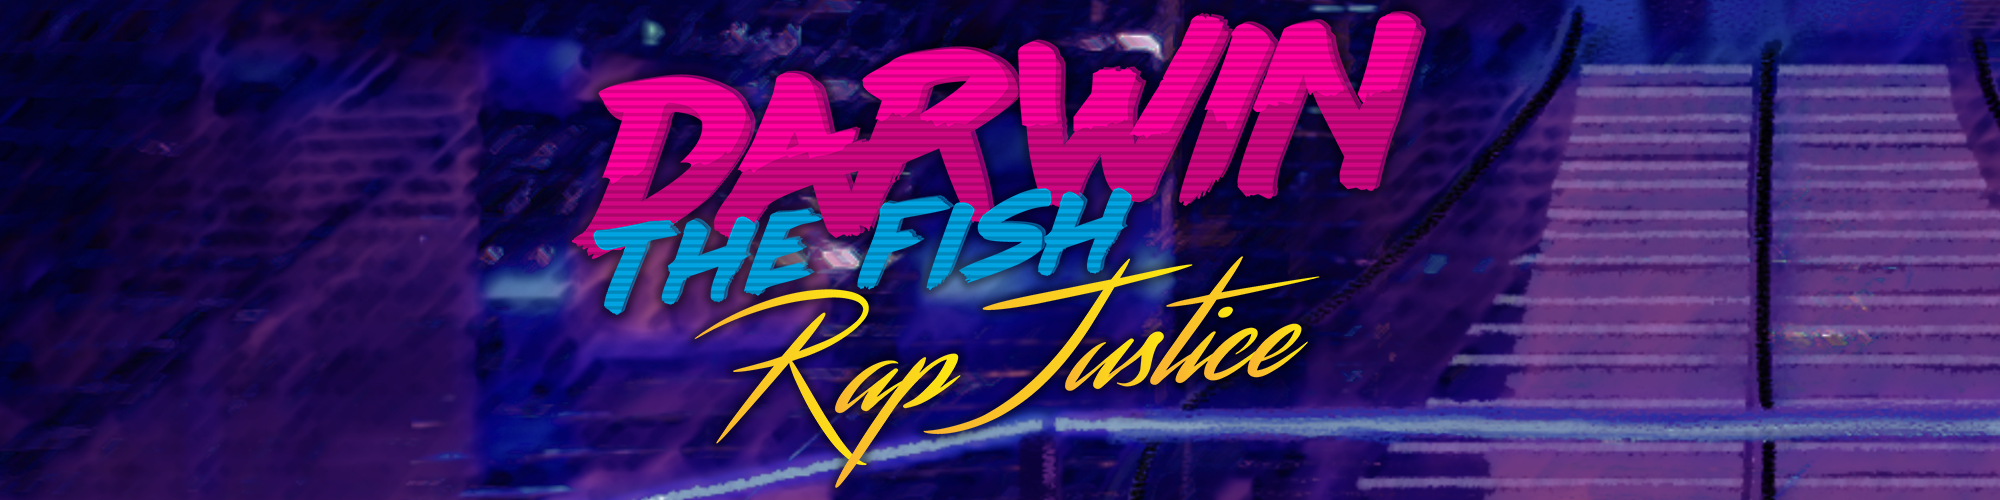 Darwin The Fish Rap Justice